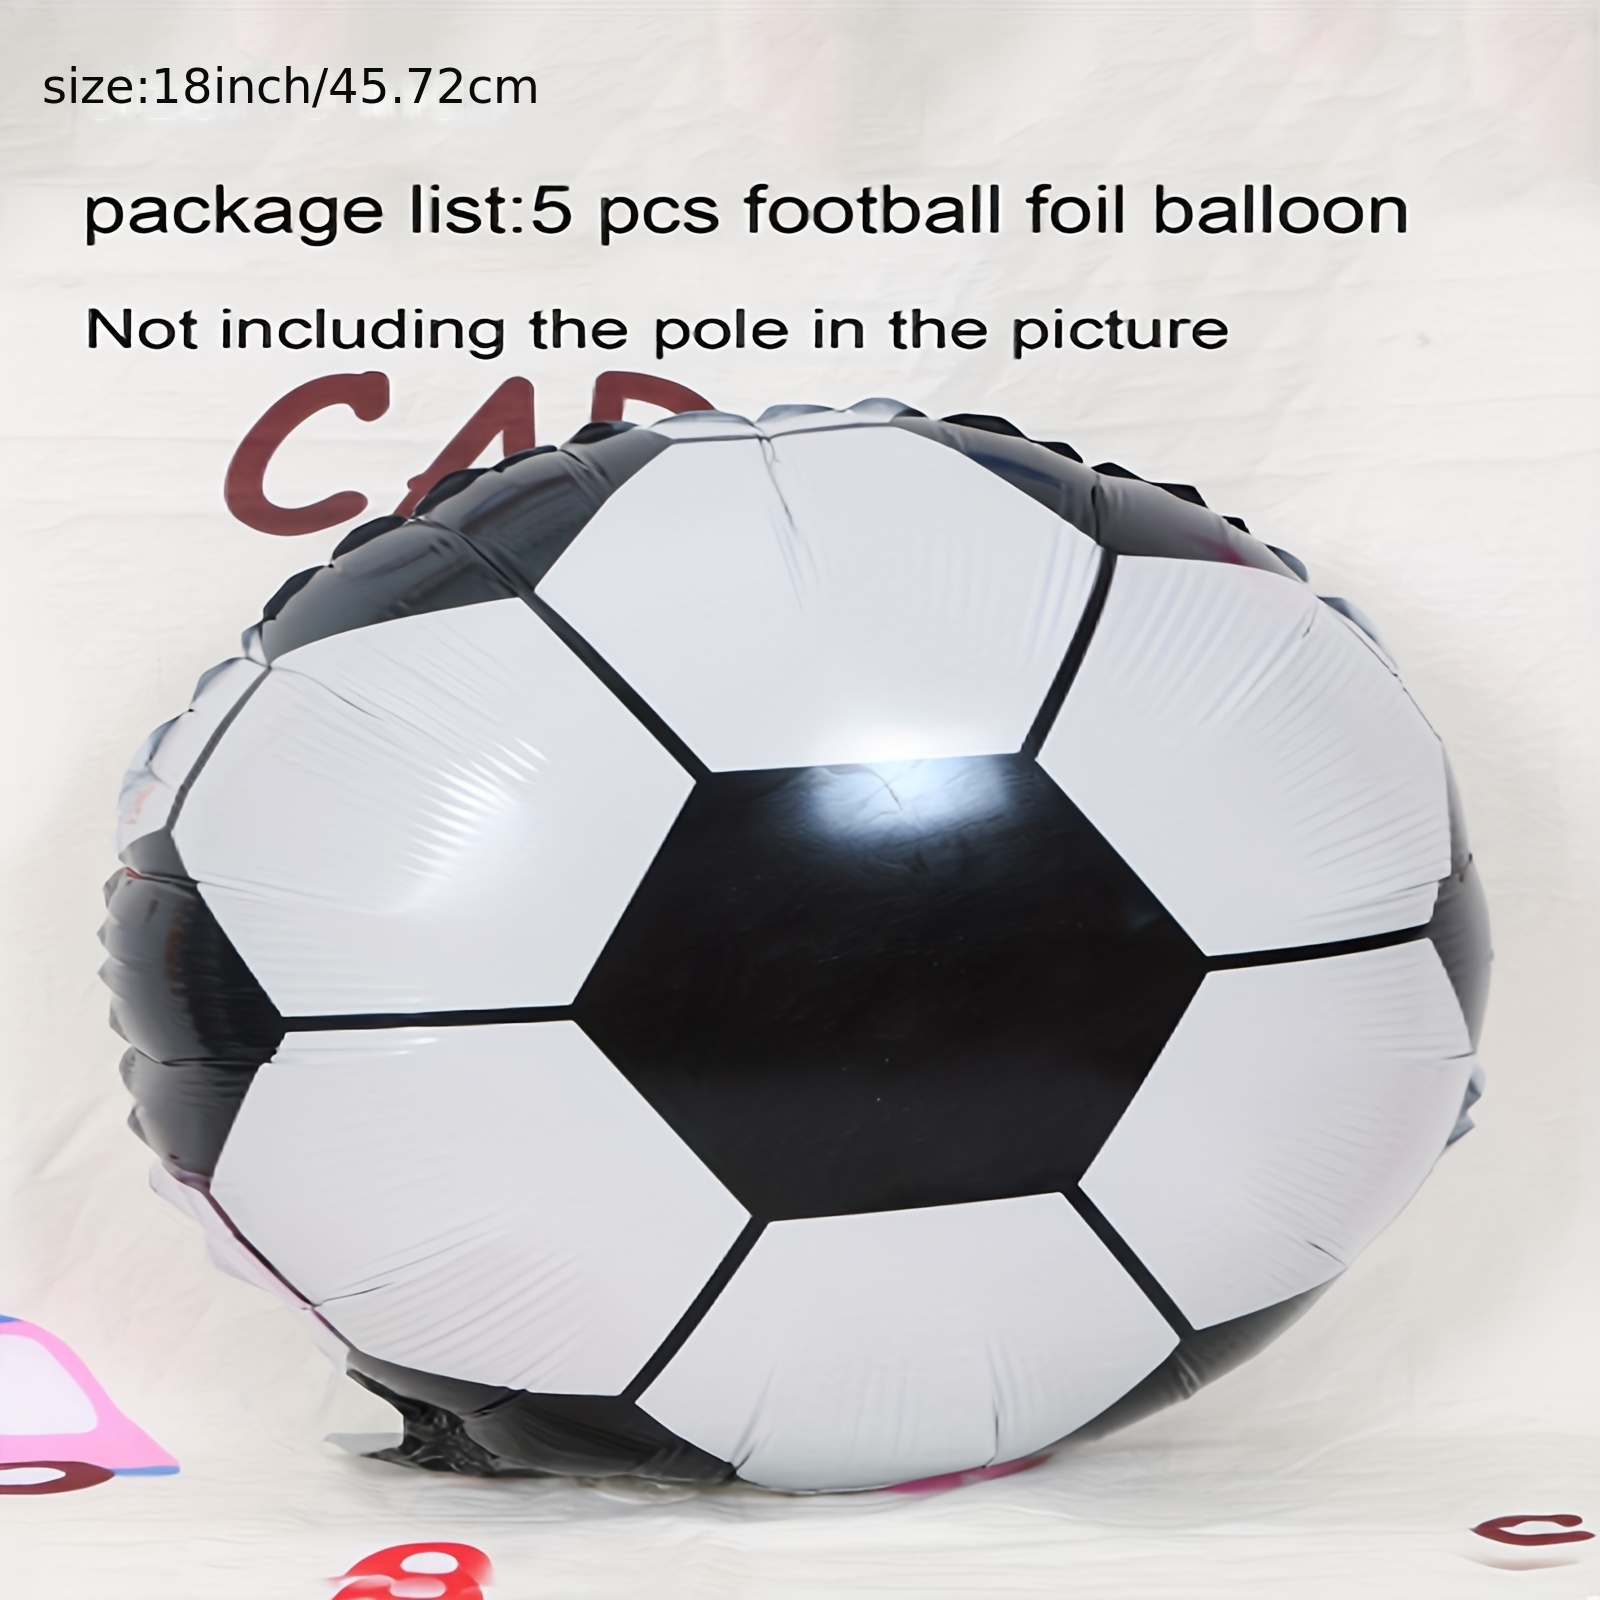 Globo pelota / balón fútbol. blanco y negro